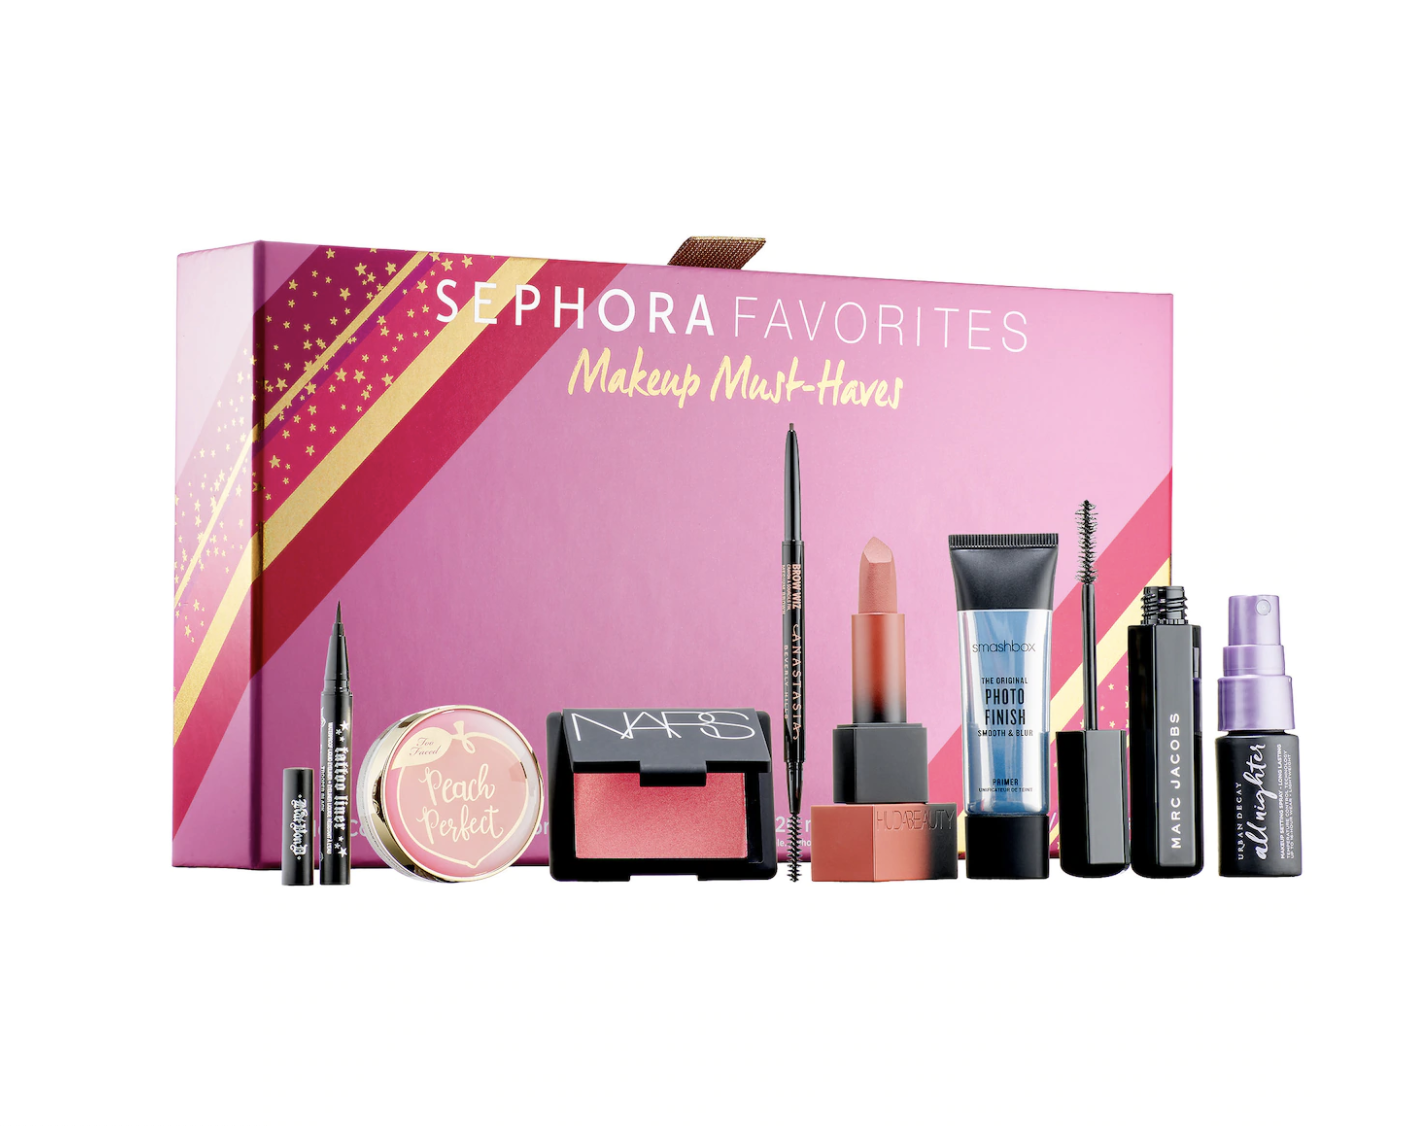 sephora makeup favorites set, gifts for makeup lovers